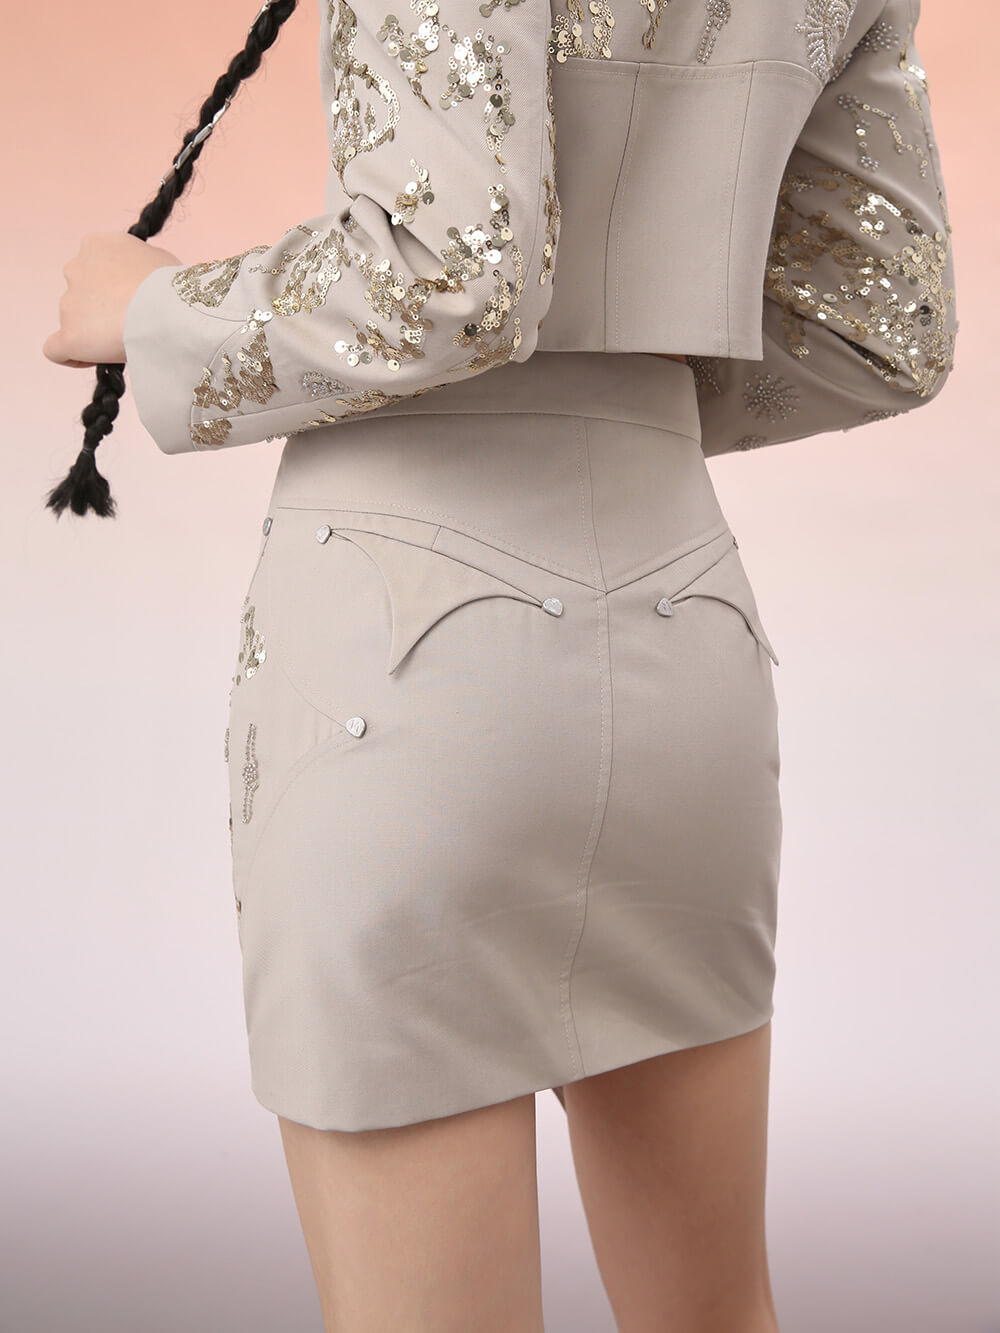 MUKZIN Short Asymmetric Paillette Skirt